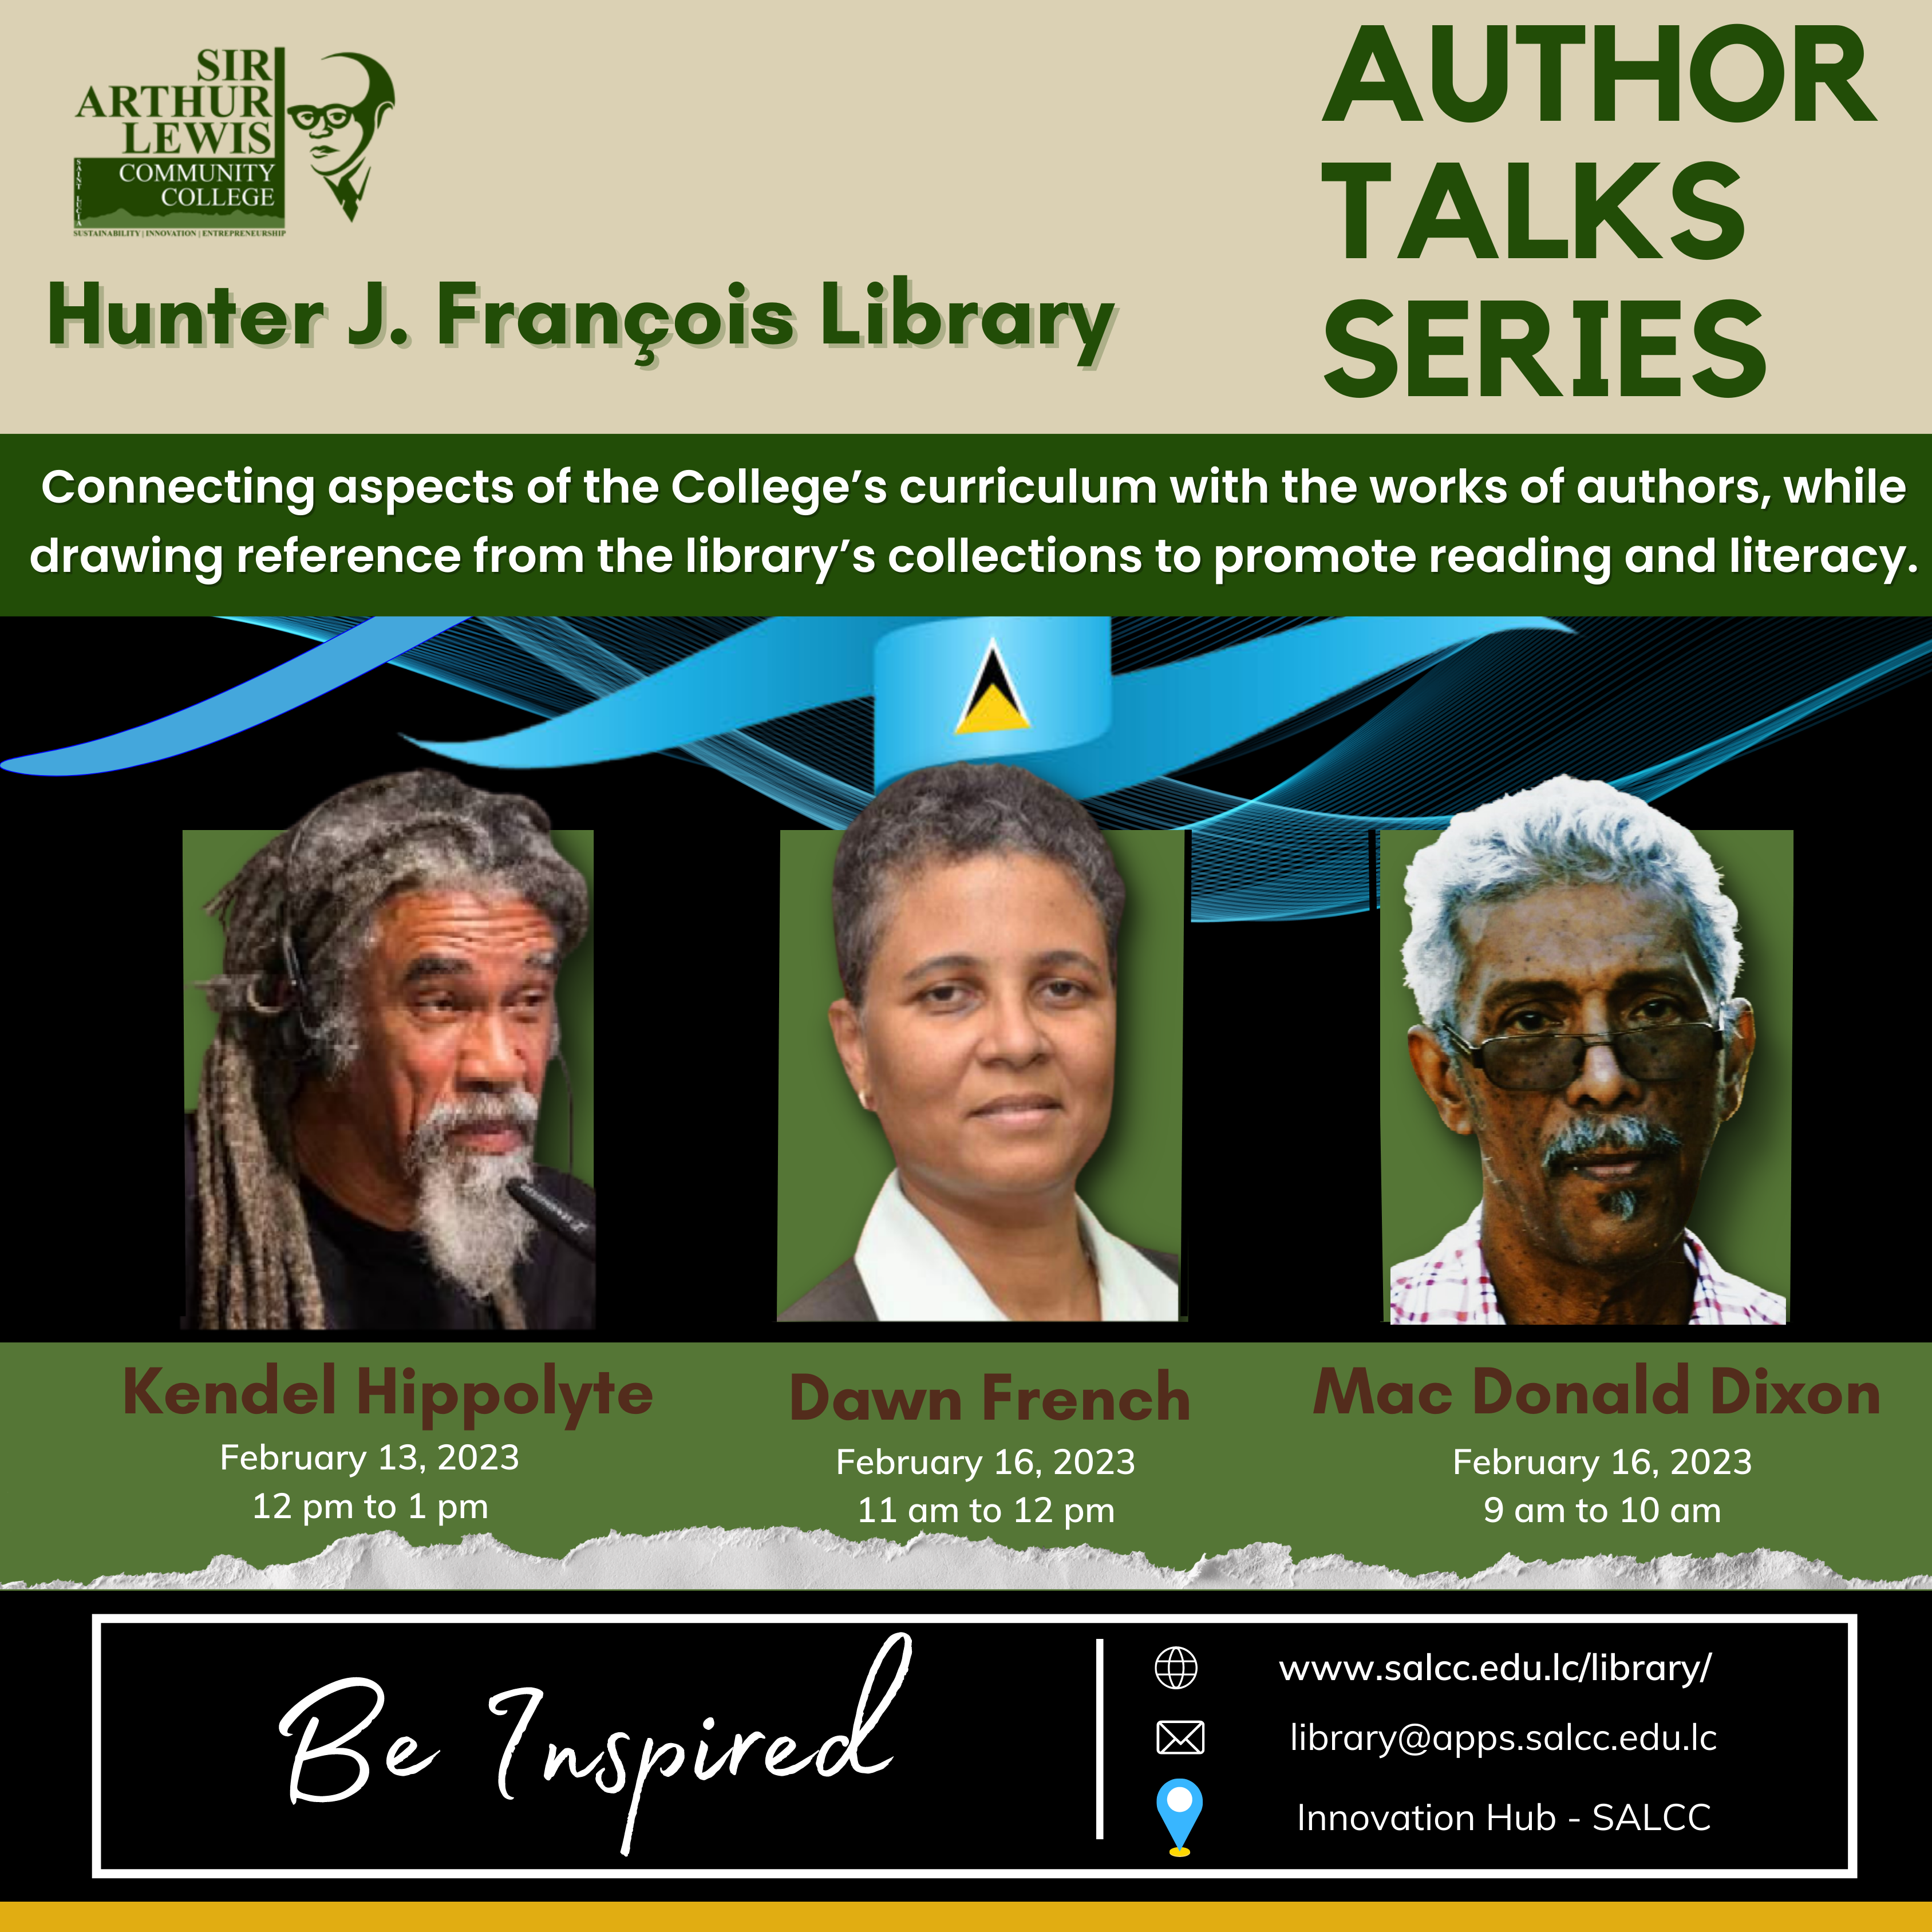 hunter j. francois library premieres author talks series